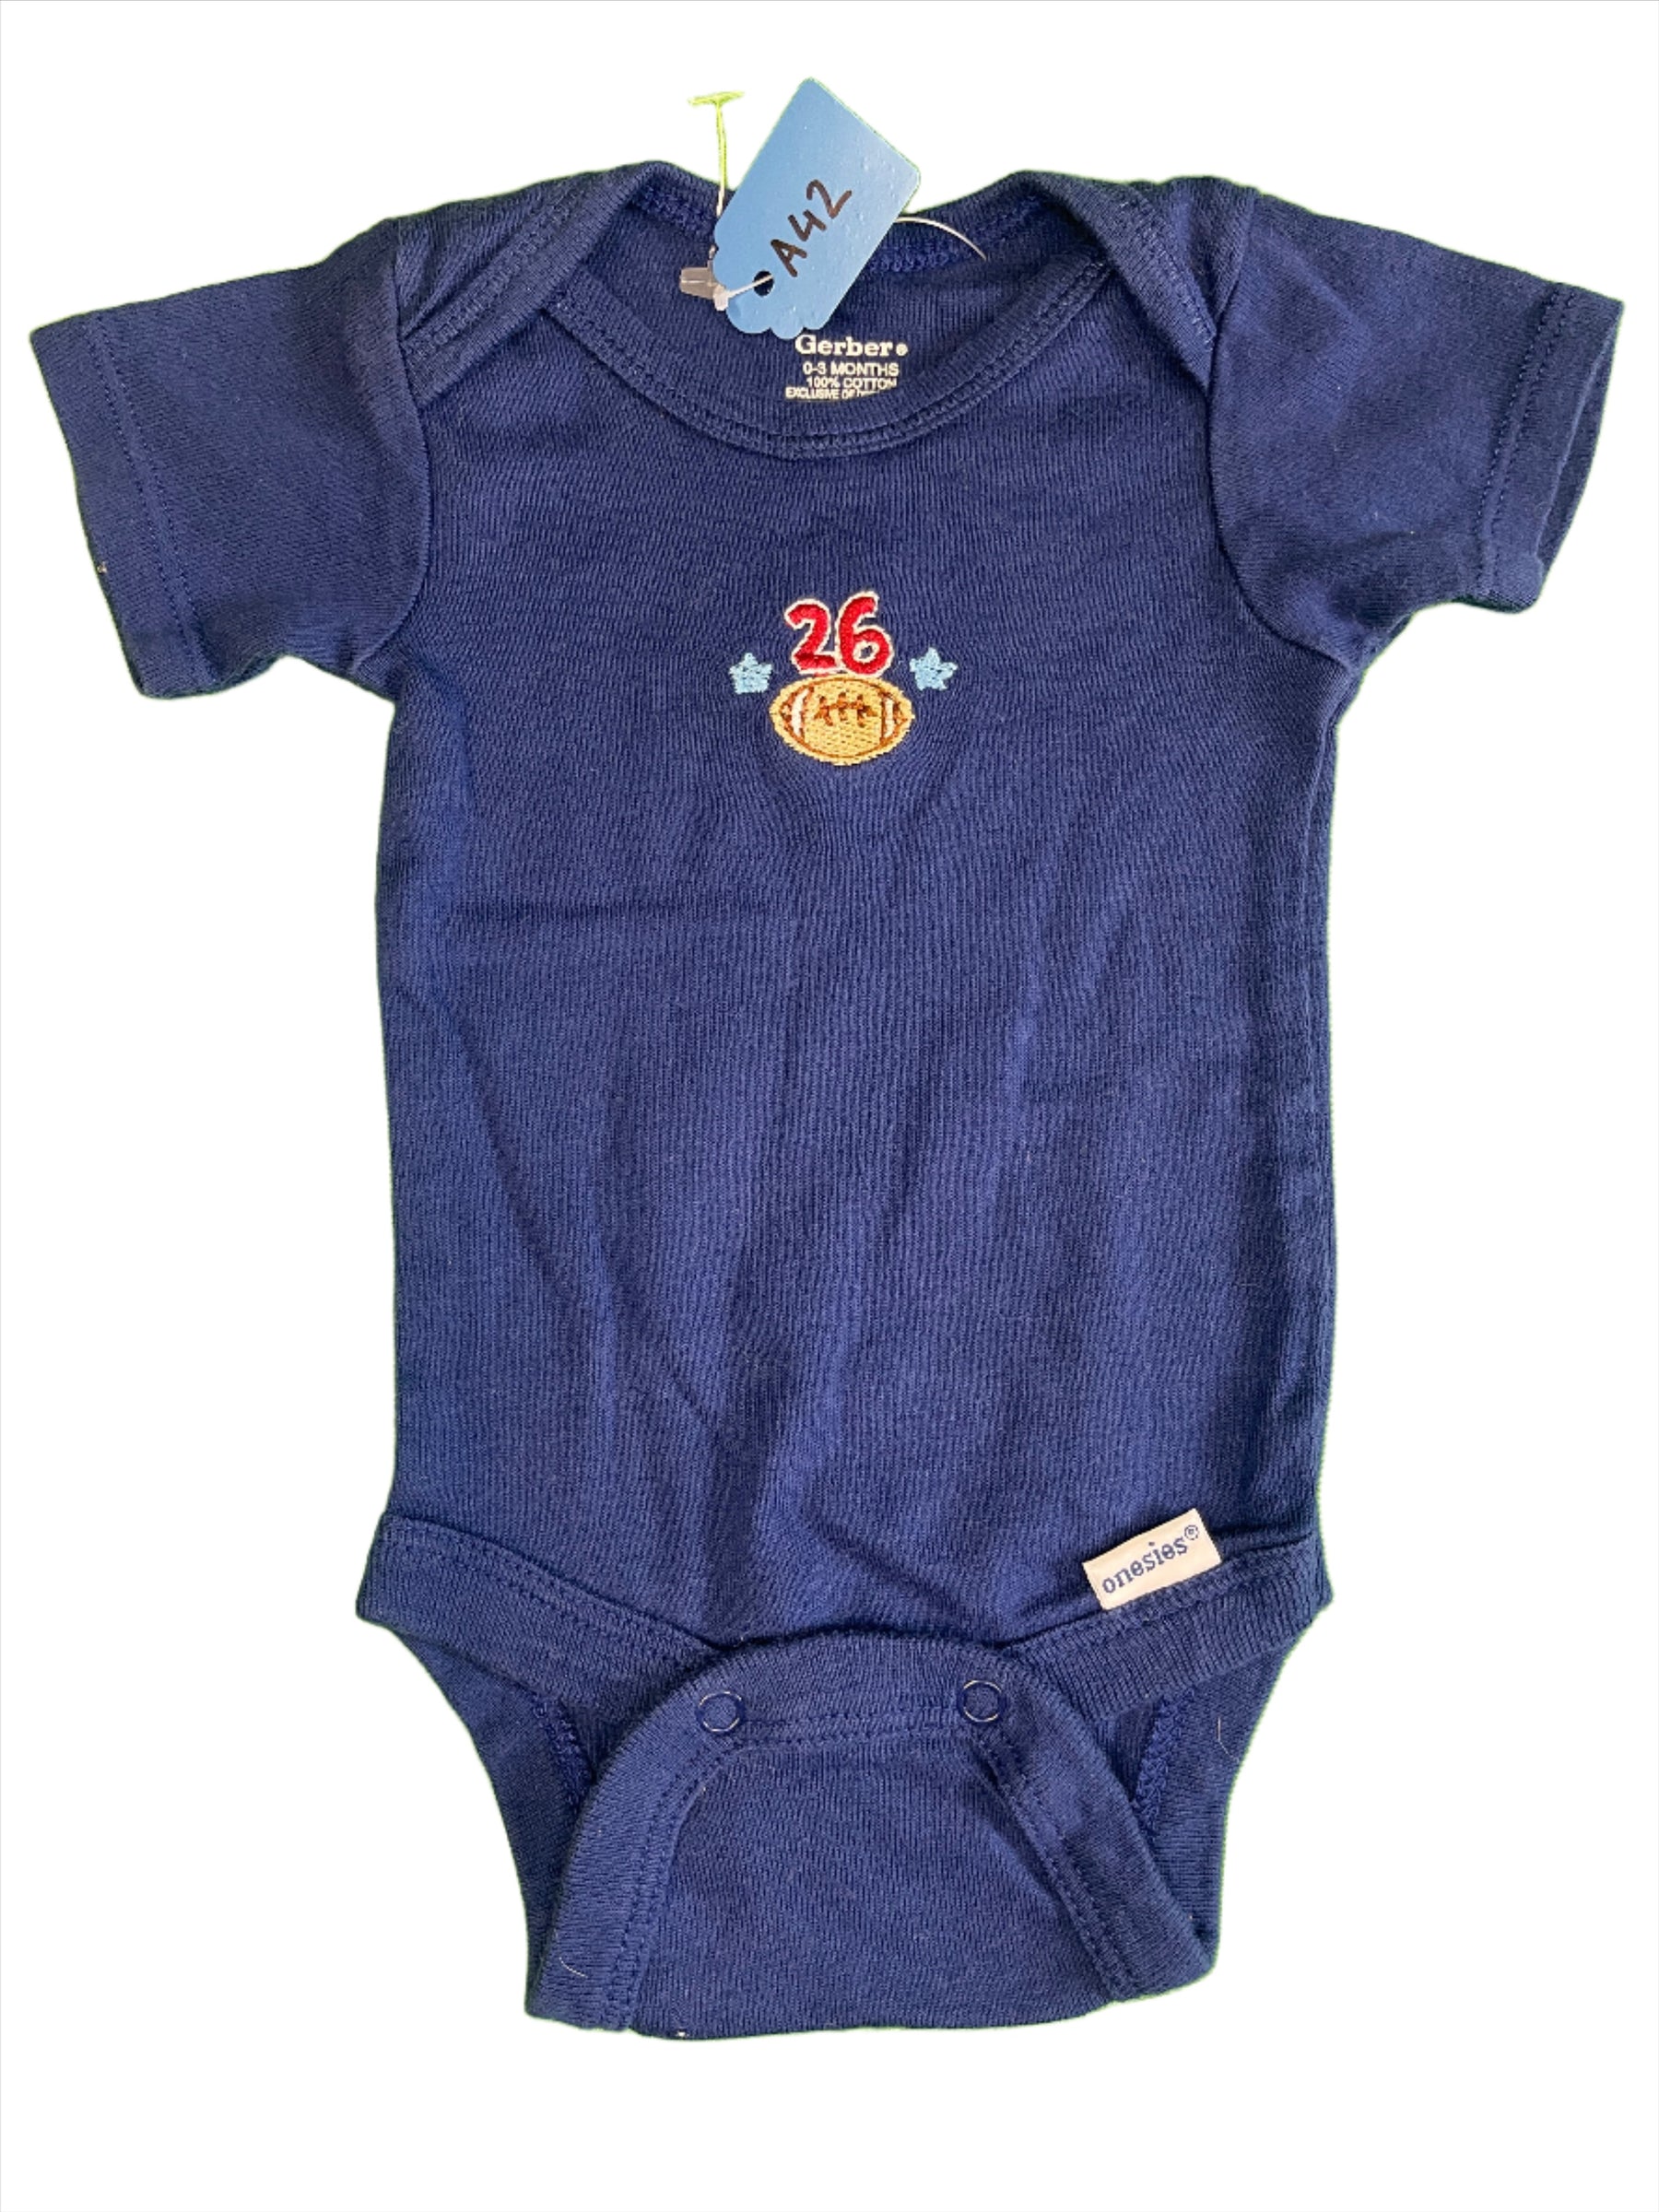 American Football #26 Bodysuit/Vest Infant Baby 0-3 Months